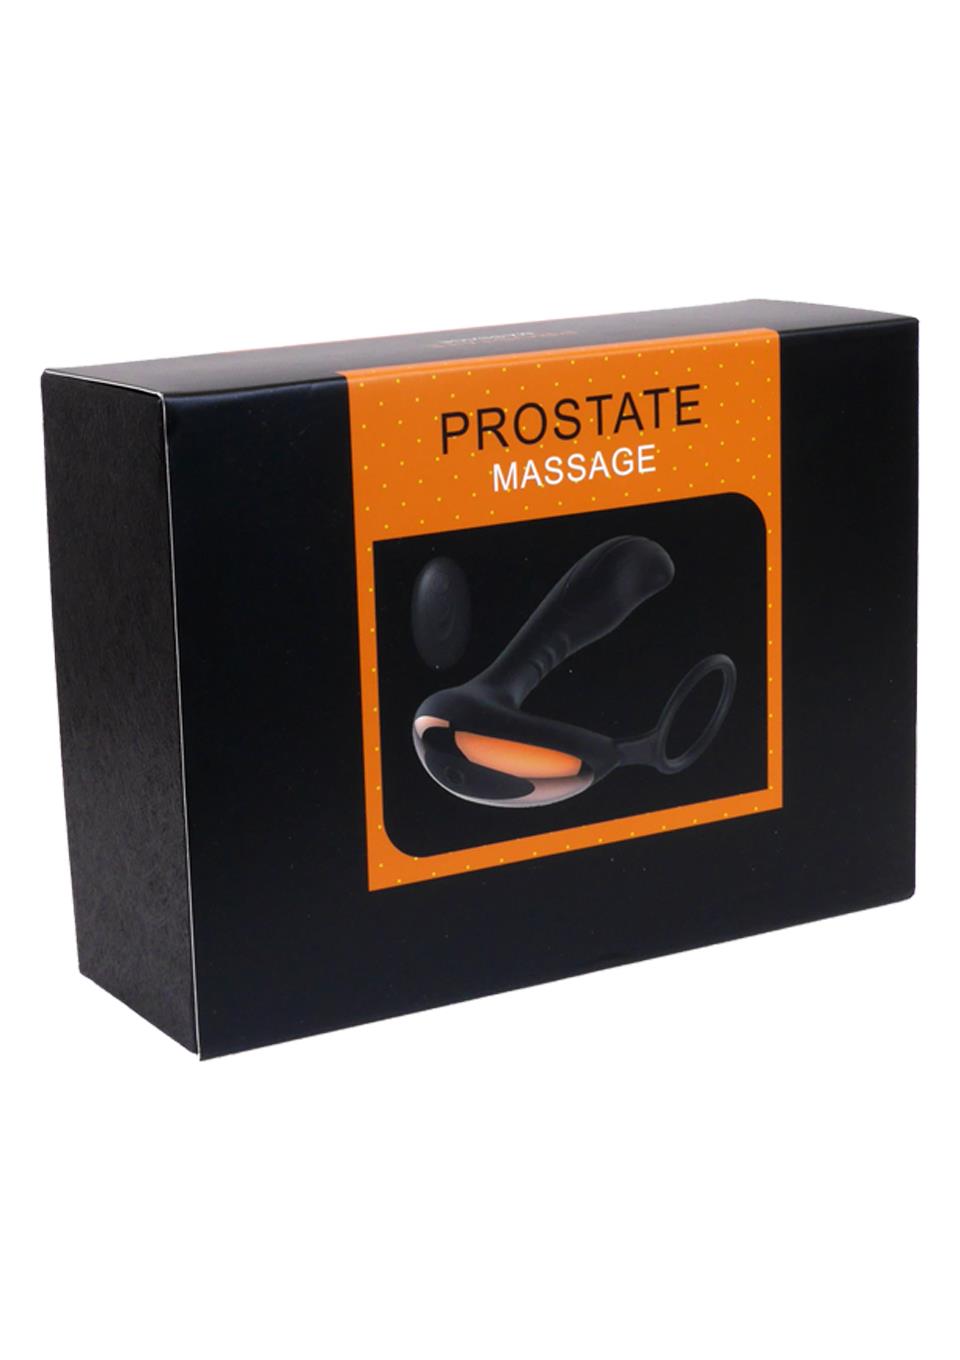 22-00015 prostate massager